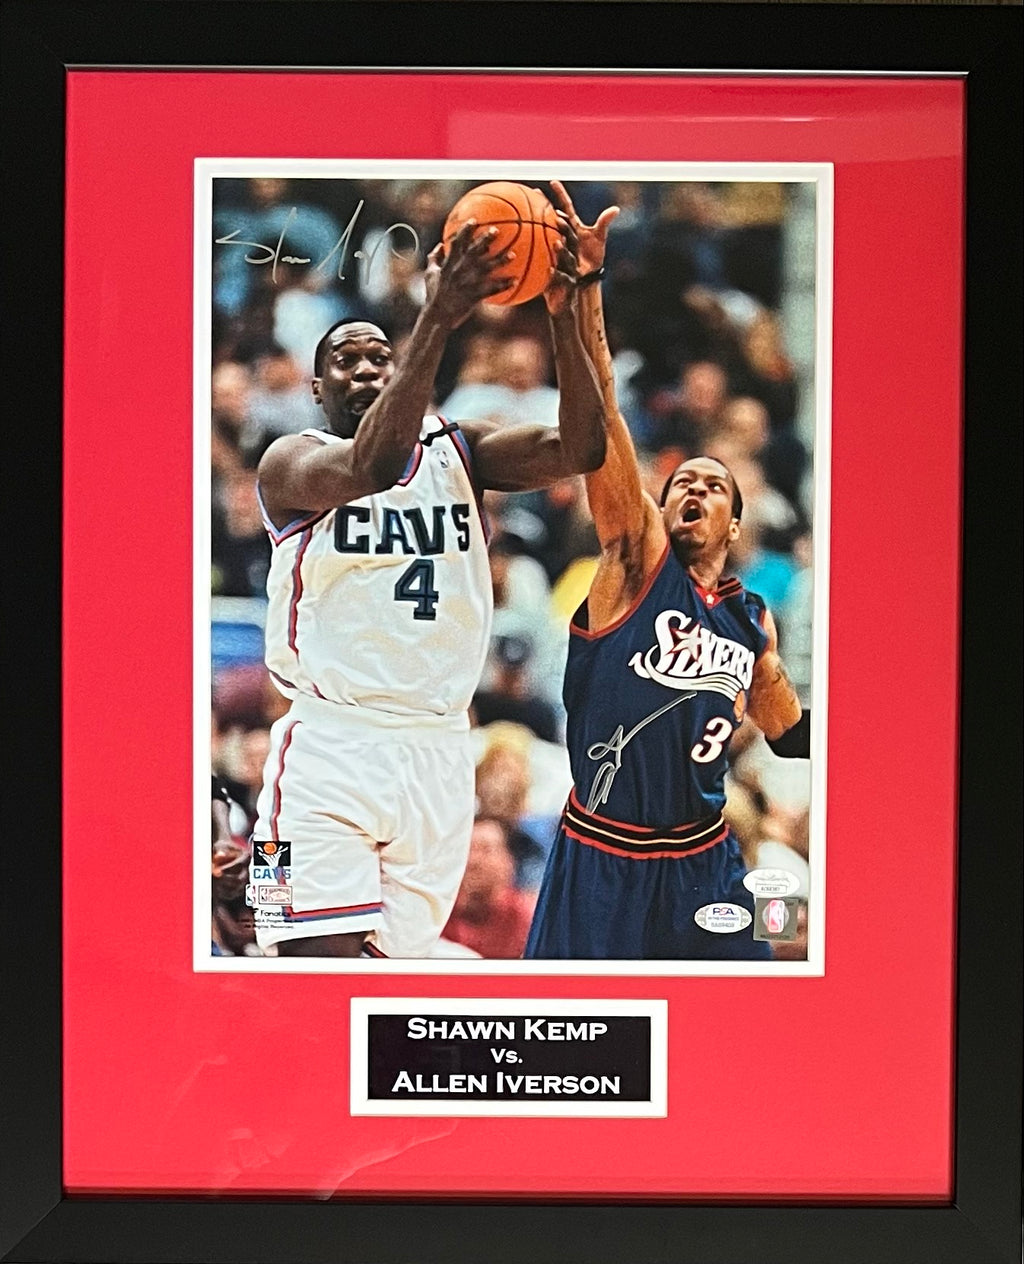 Allen Iverson Shawn Kemp framed signed 11x14 photo 76ers Cavaliers NBA PSA JSA